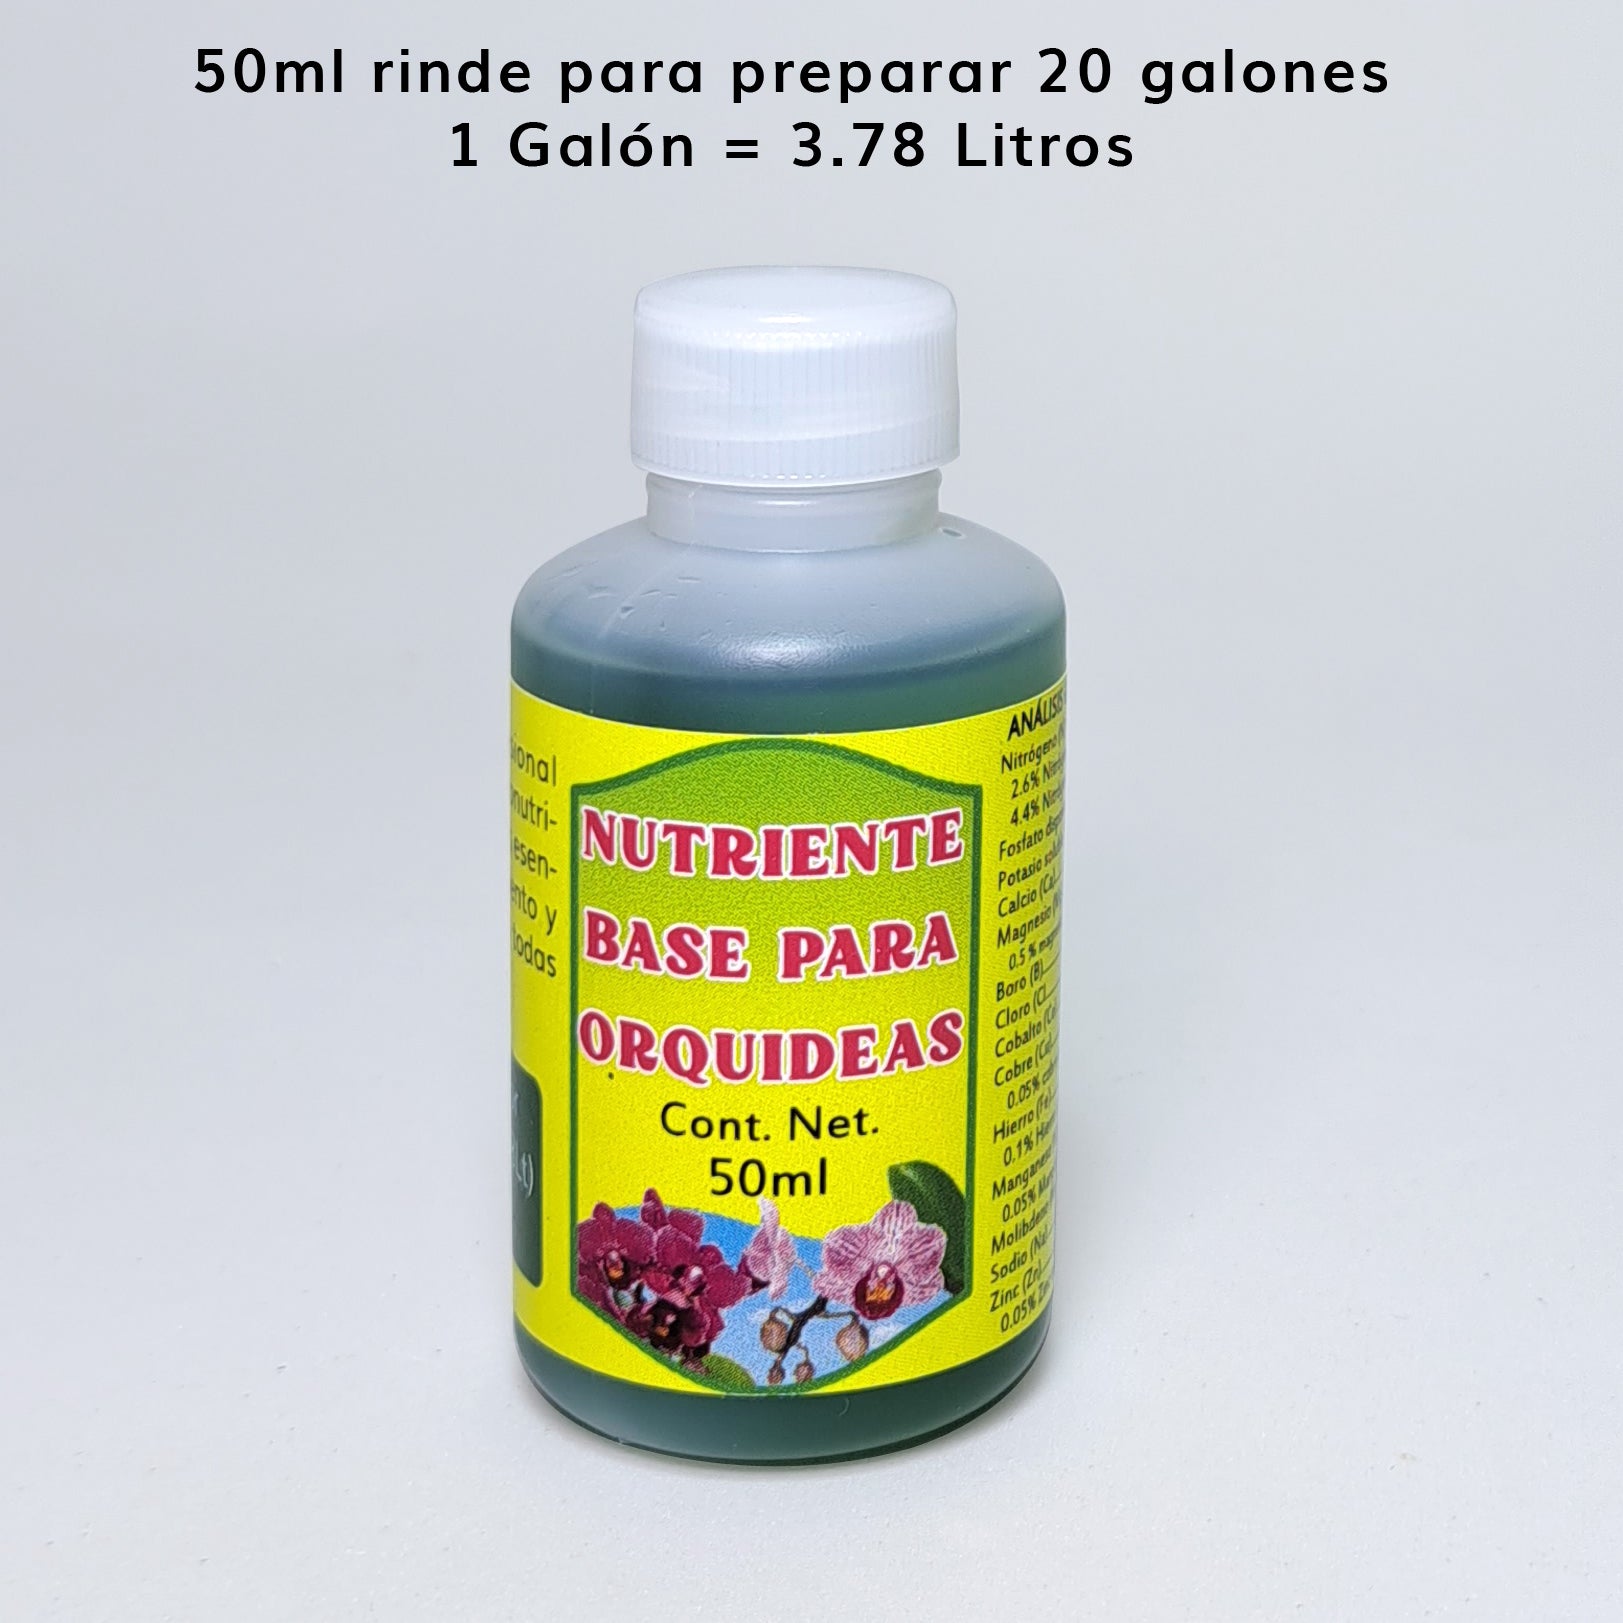 Nutriente Base para Orquideas 50ml